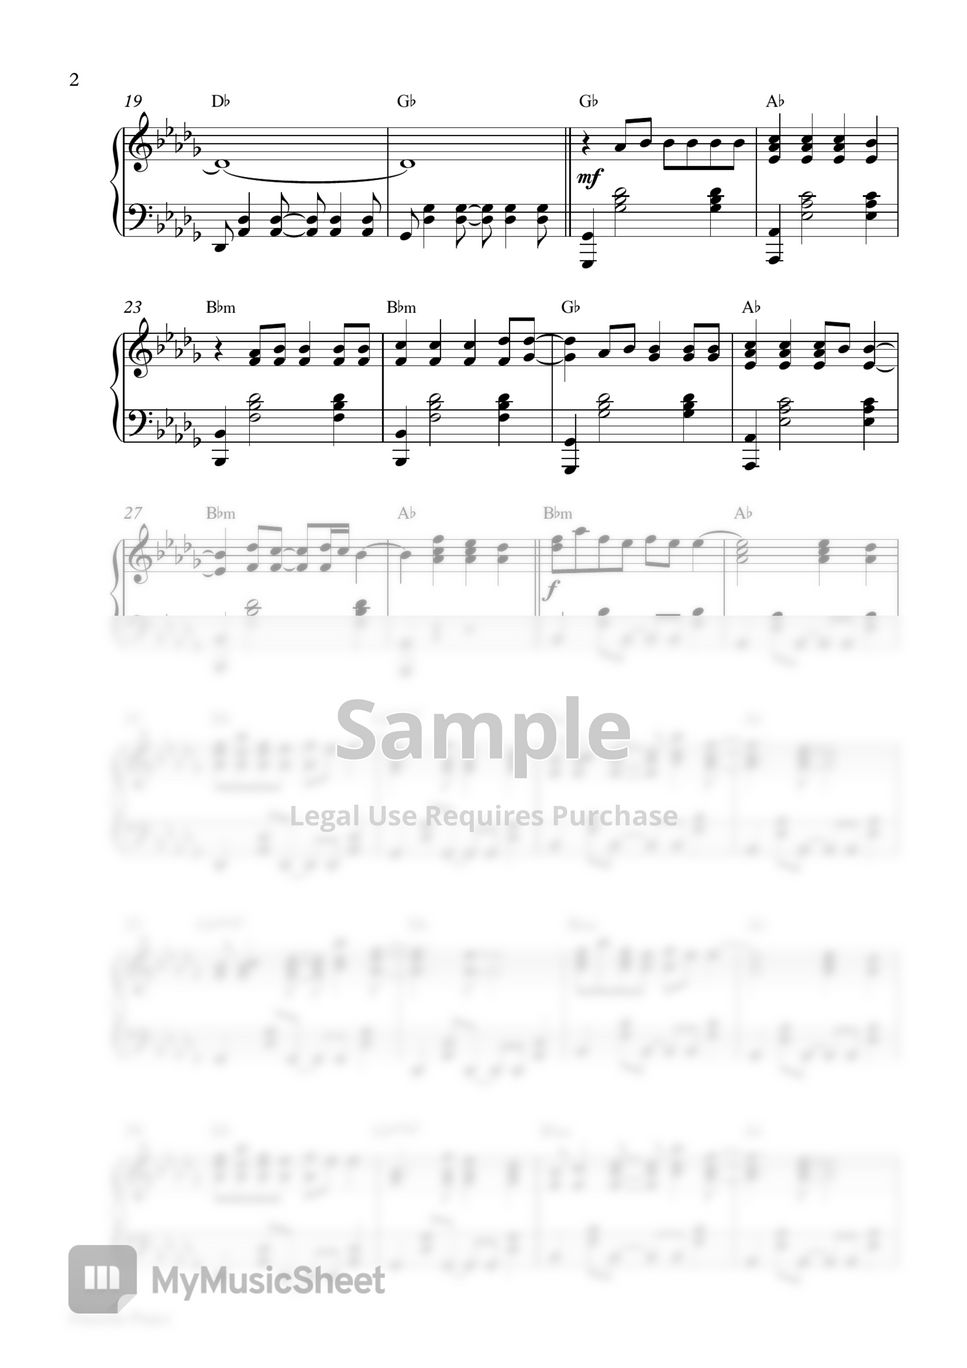 Shawn Mendes - Stitches (Piano Sheet) by Pianella Piano